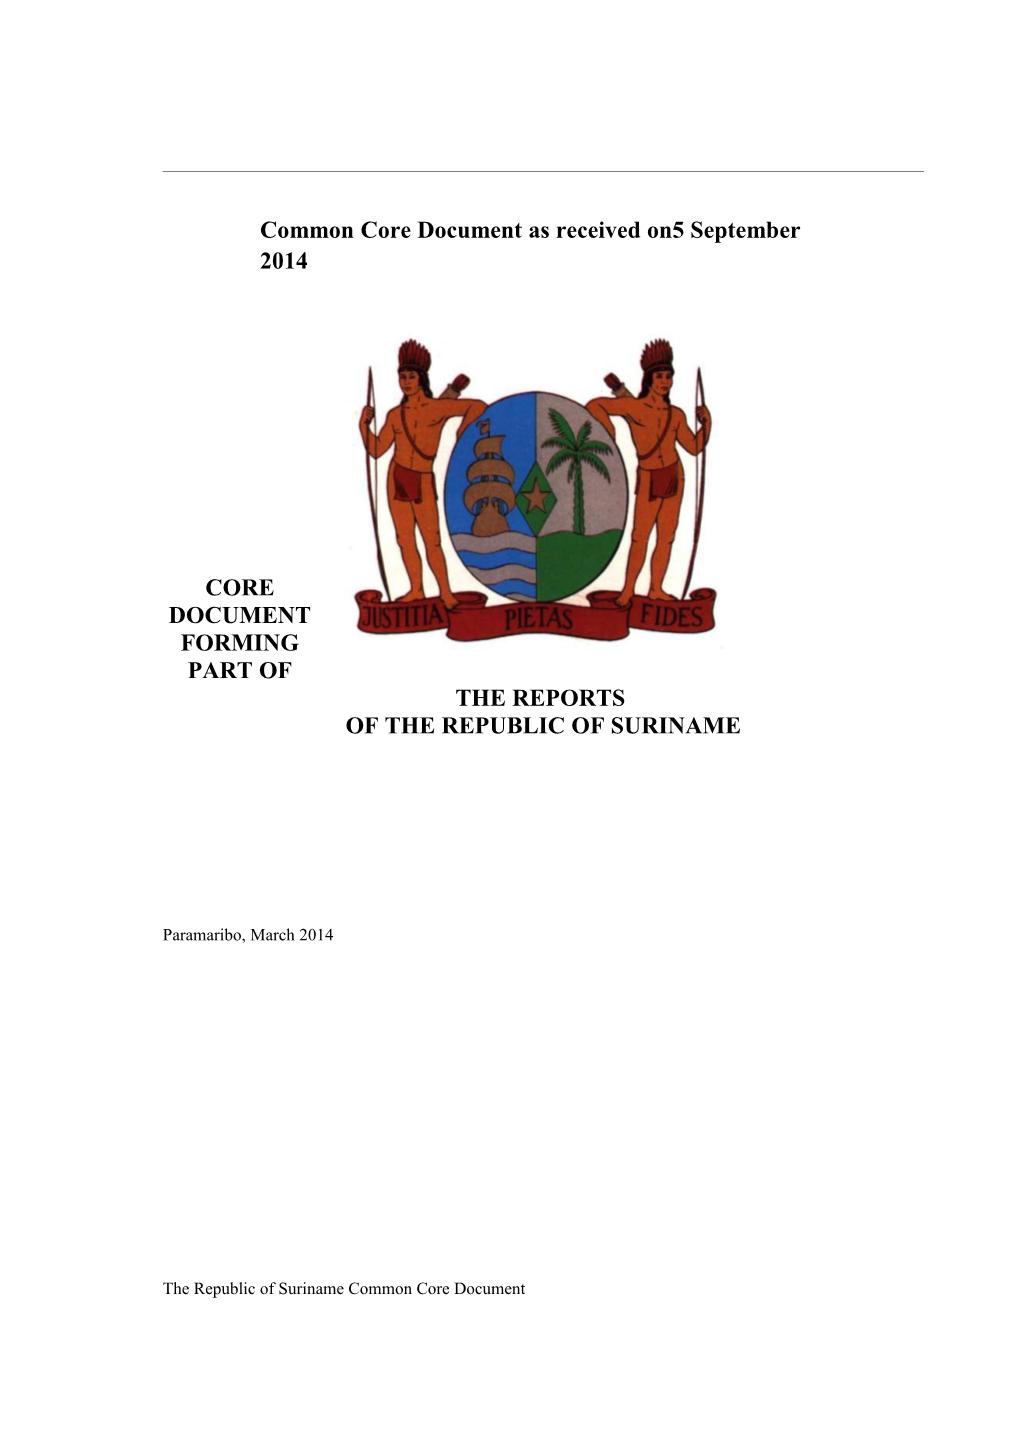 Common Core Document of the Republic of Suriname 2014